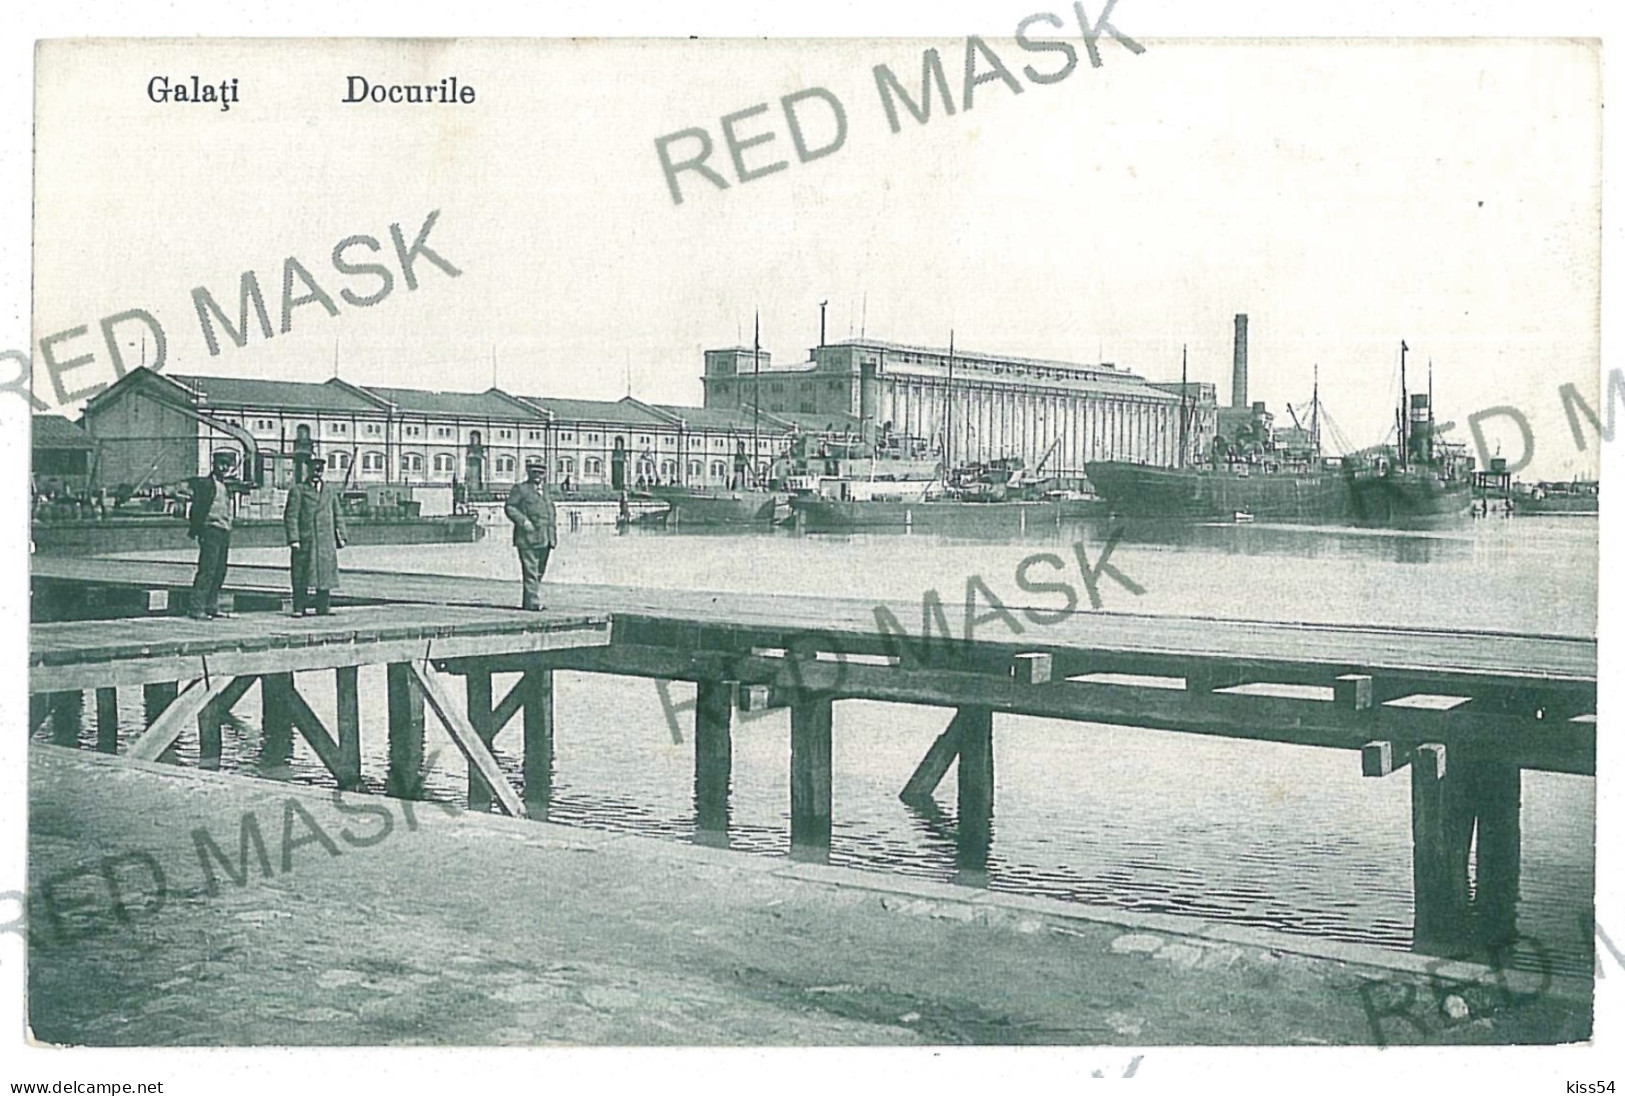 RO 84 - 11692 GALATI, Docurile, Romania - Old Postcard - Unused - Rumänien